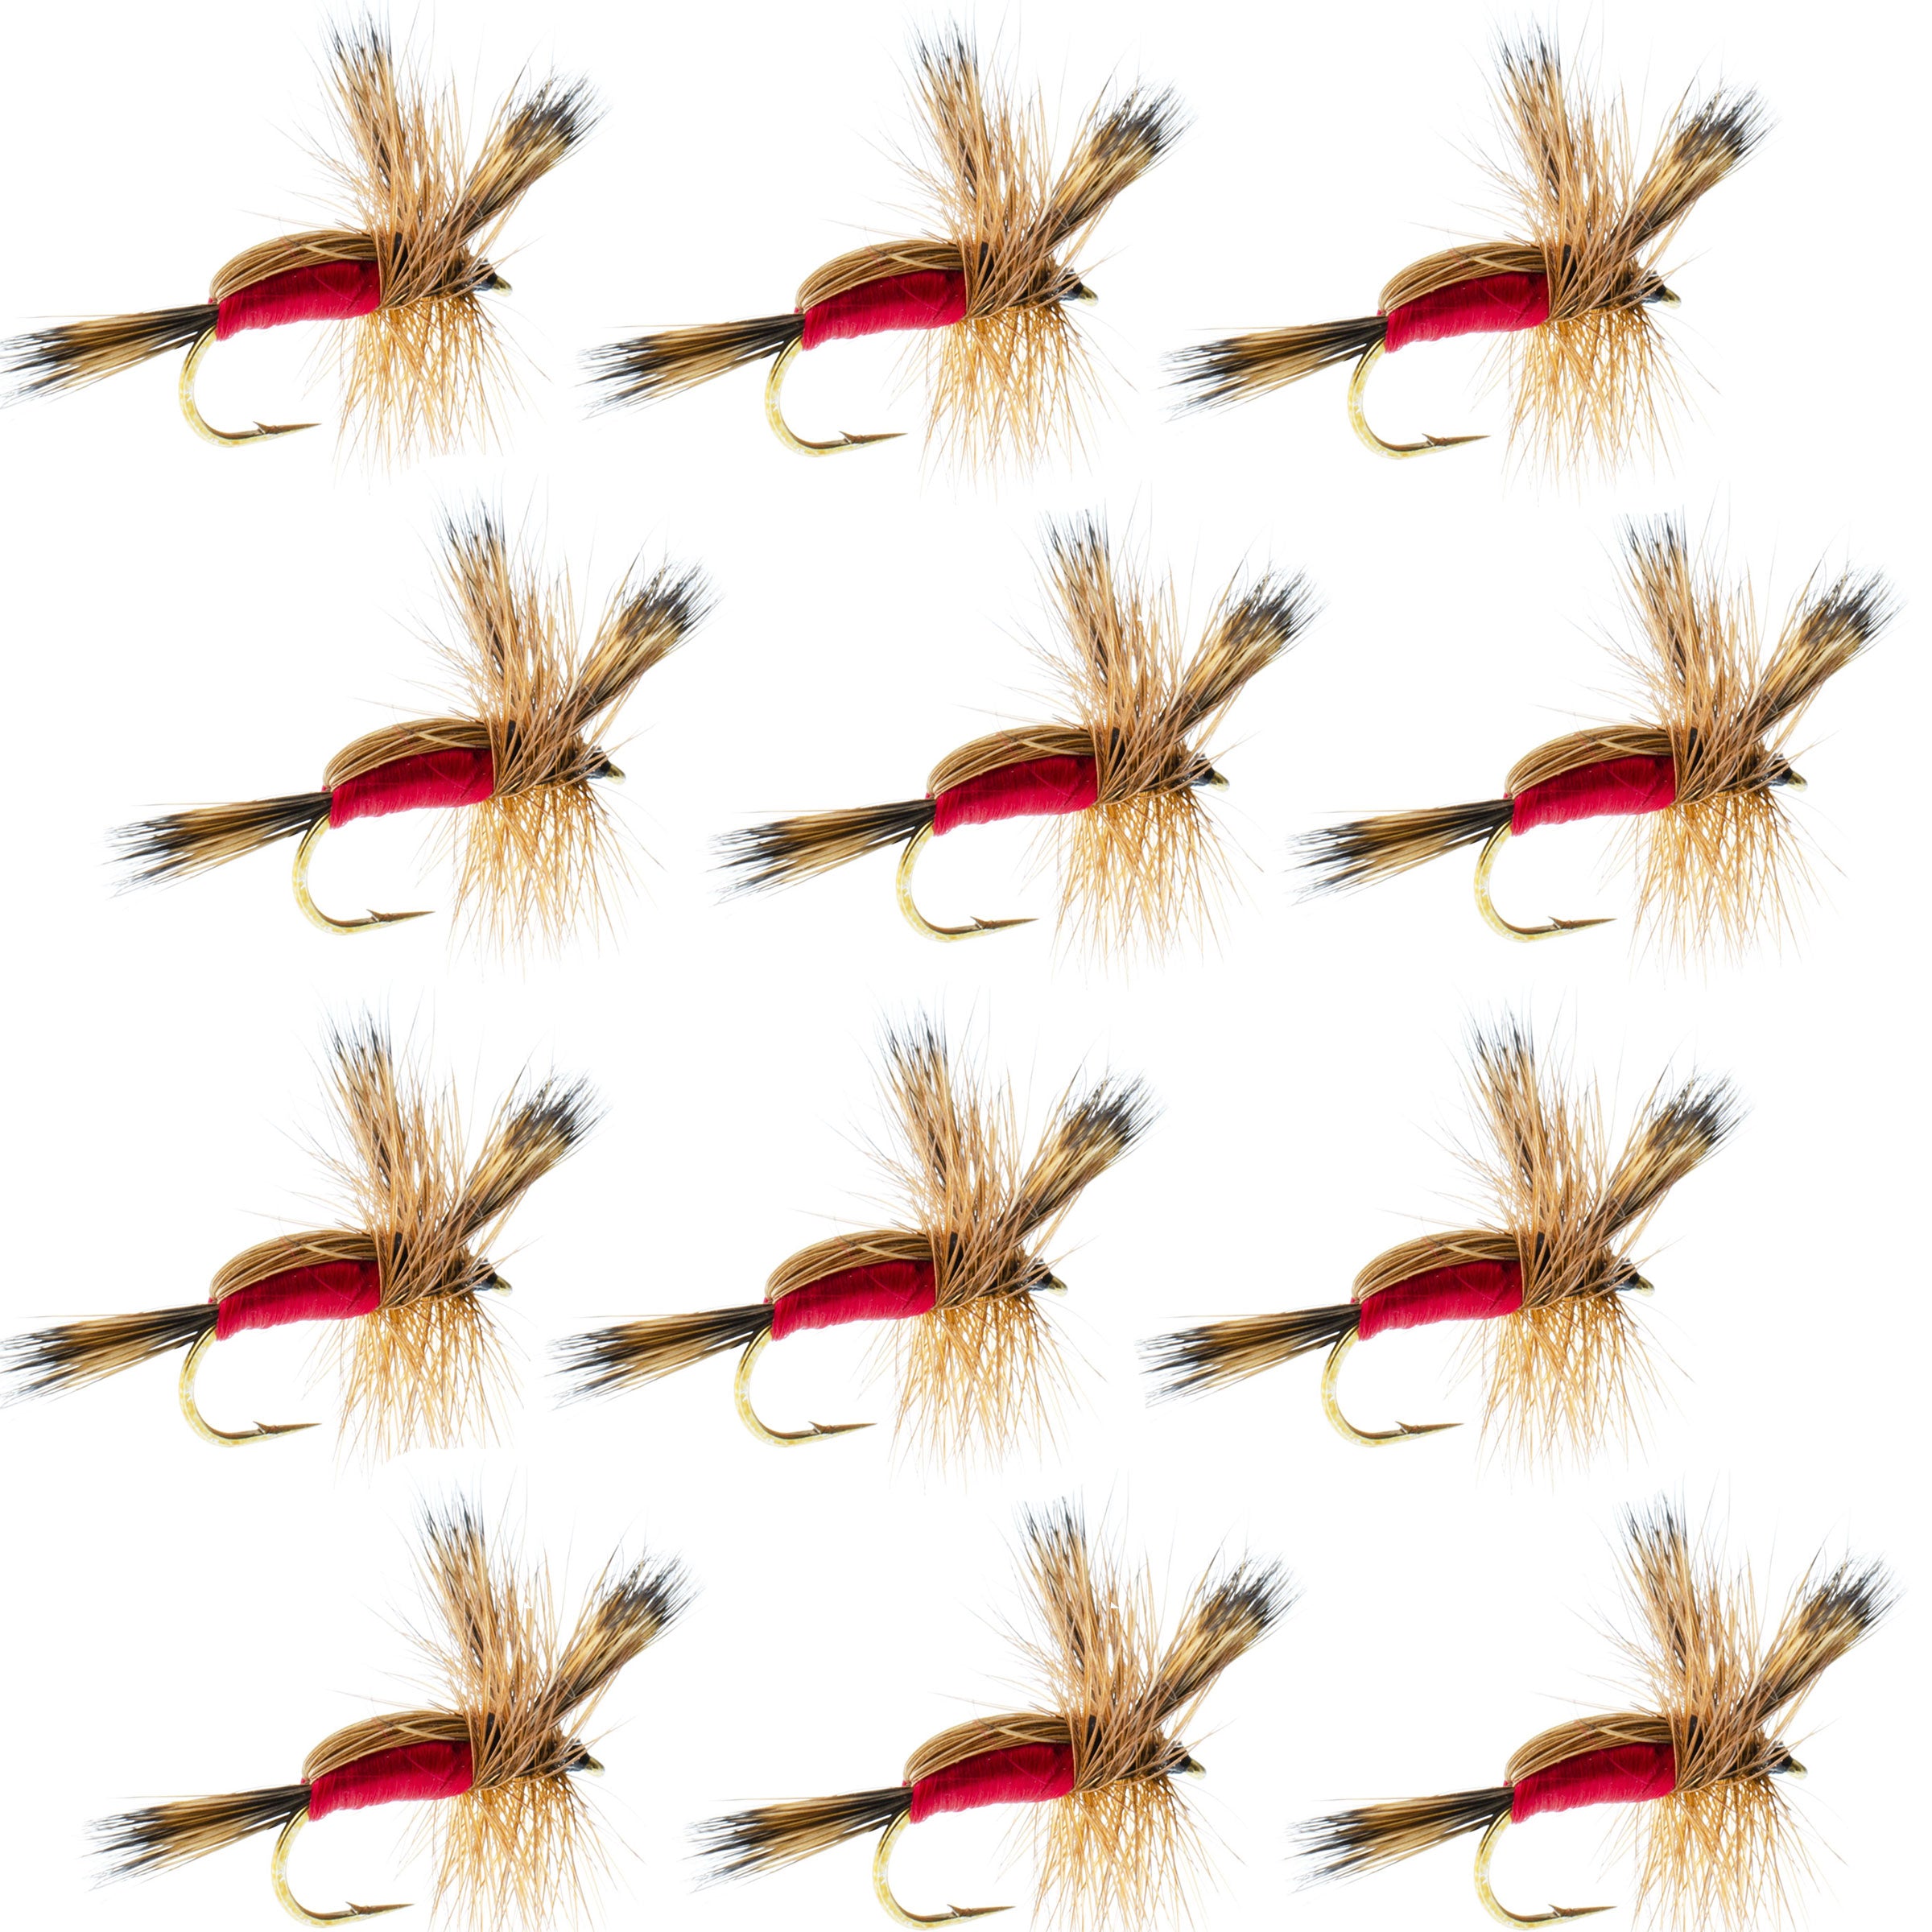 Red Humpy Classic Hair Wing Dry Fly - 1 docena de anzuelos para moscas, tamaño 10